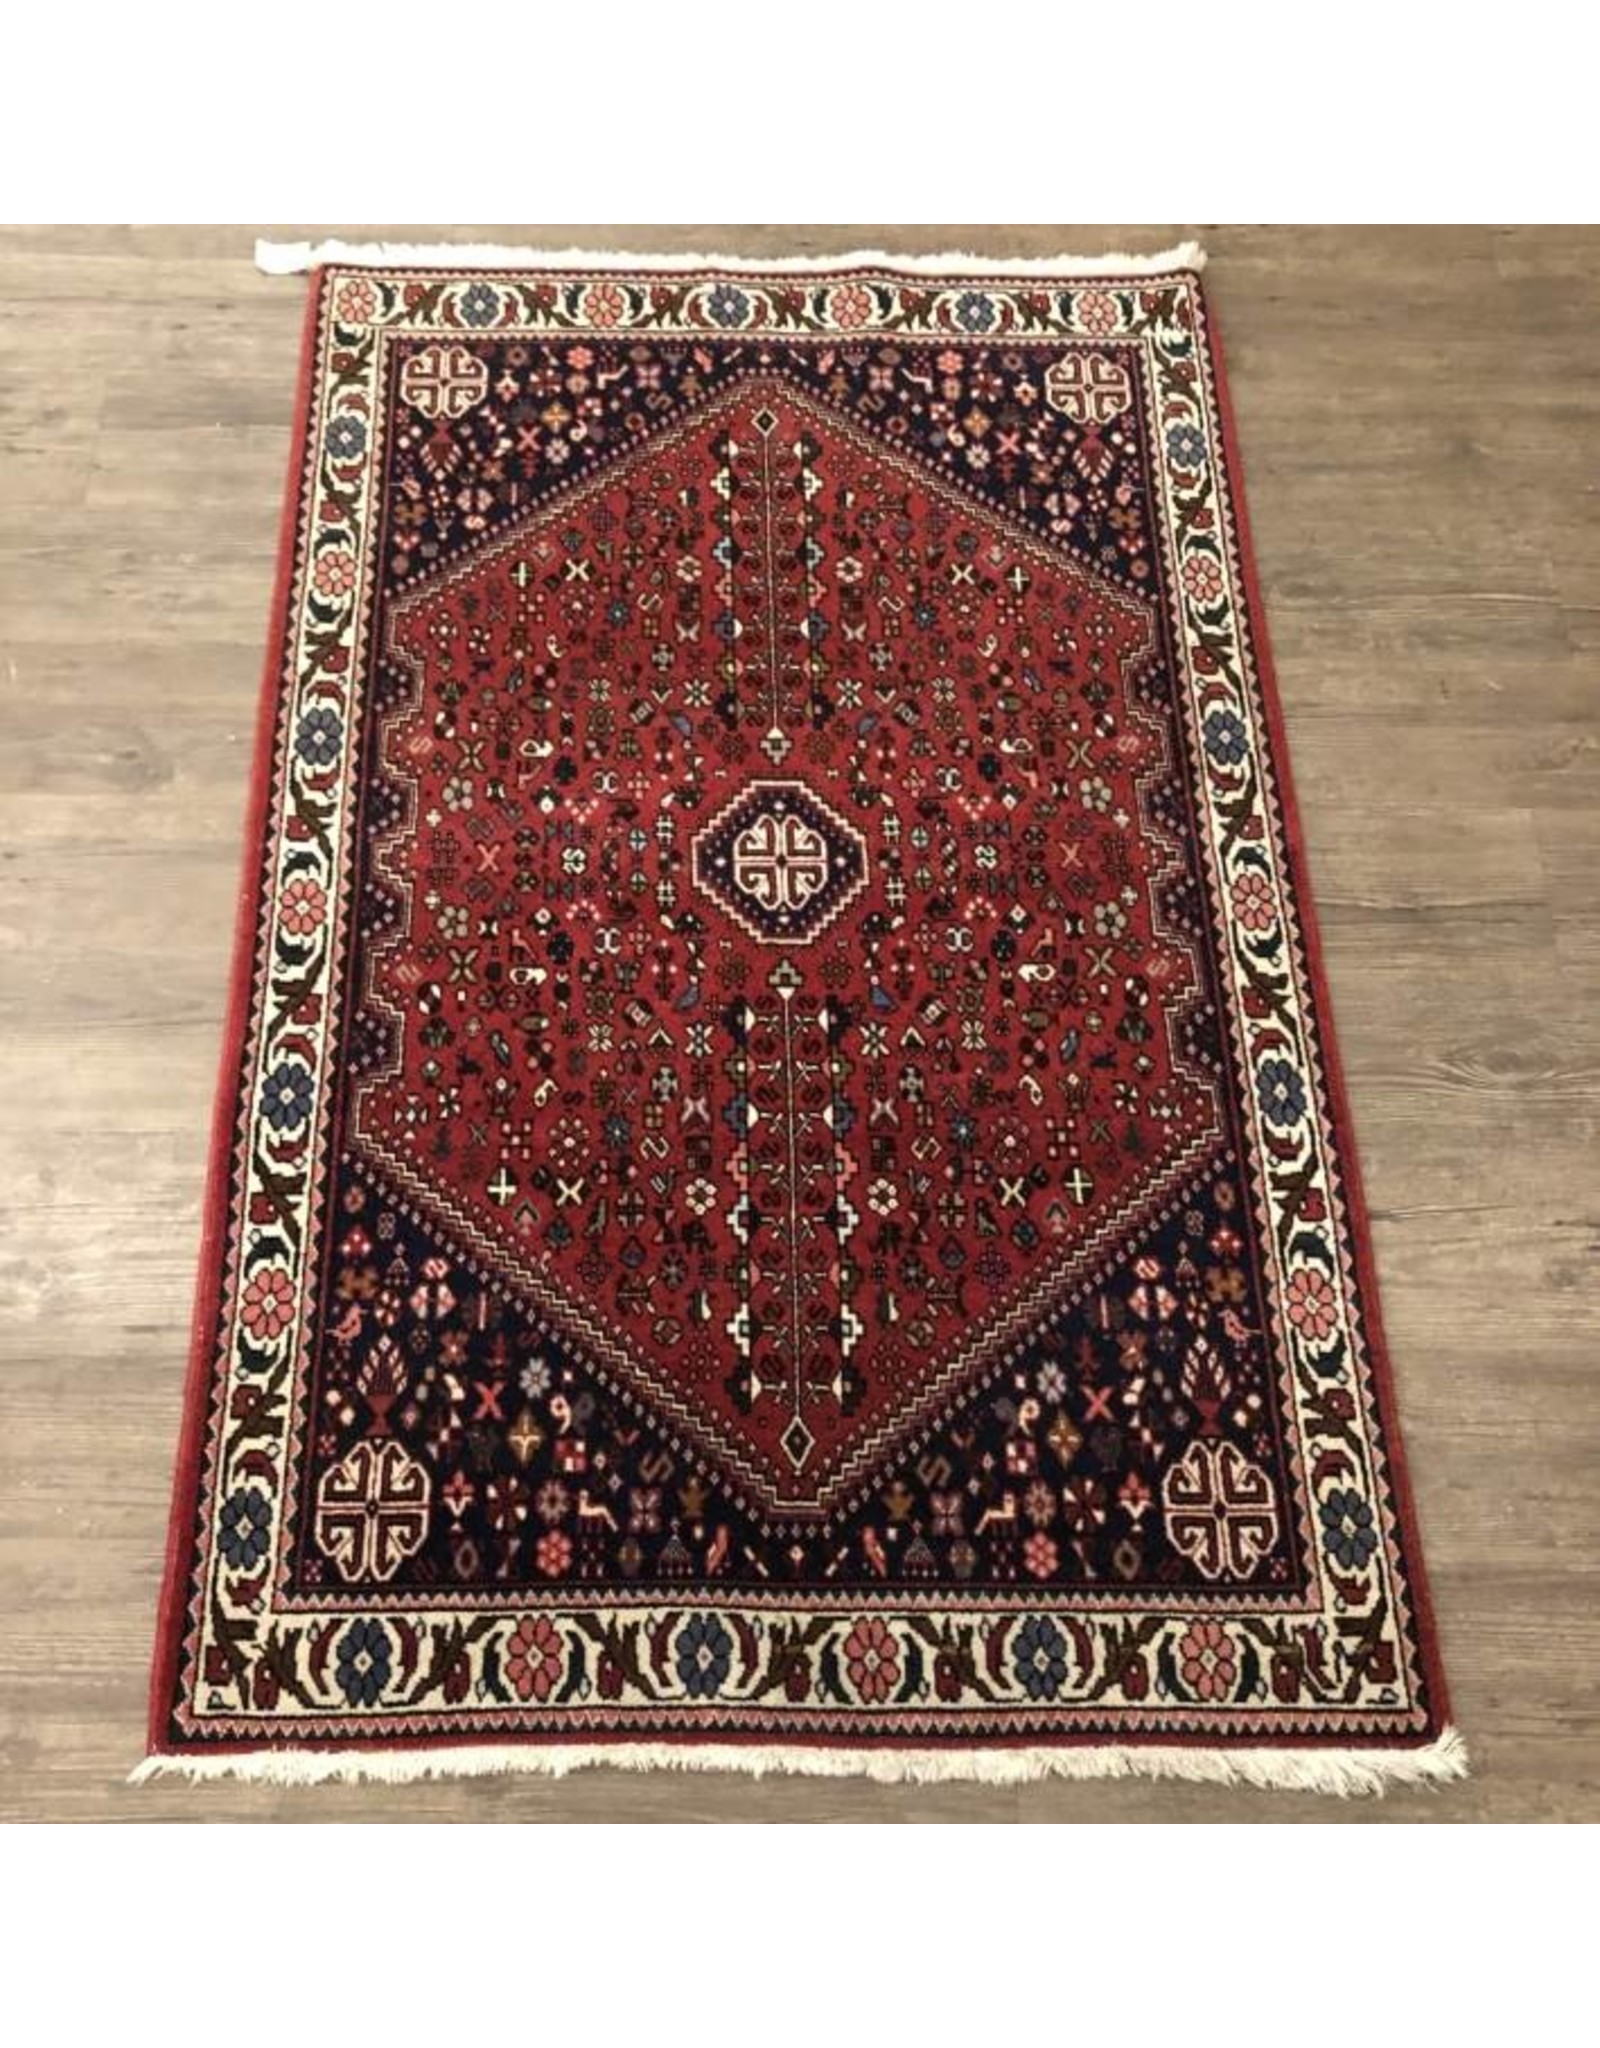 Carpet - red floral Persian, 3'5" x 5'4"